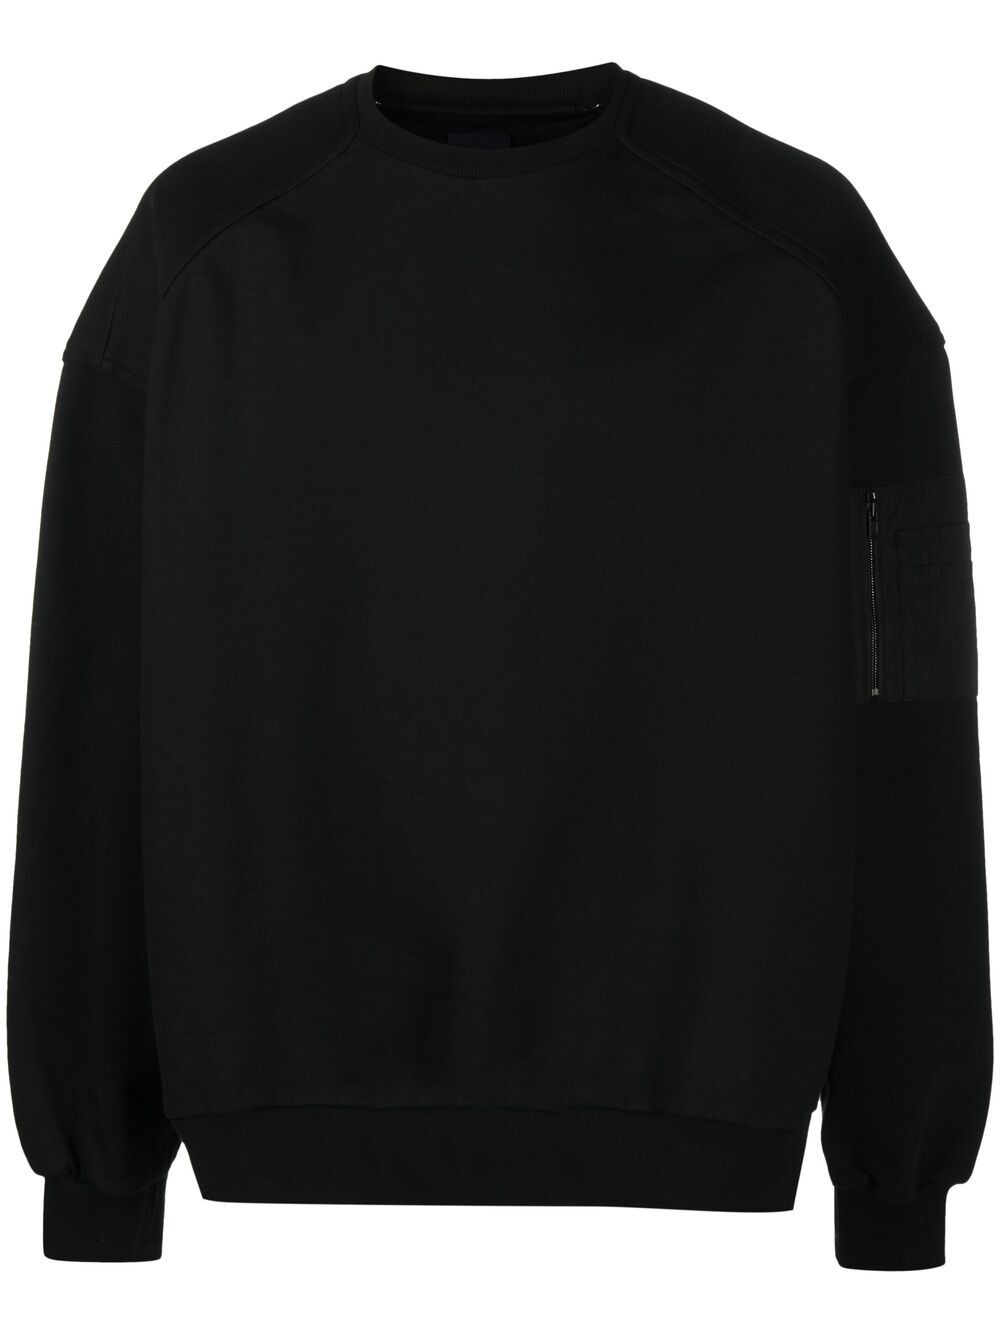 arm-pocket sweatshirt - 1